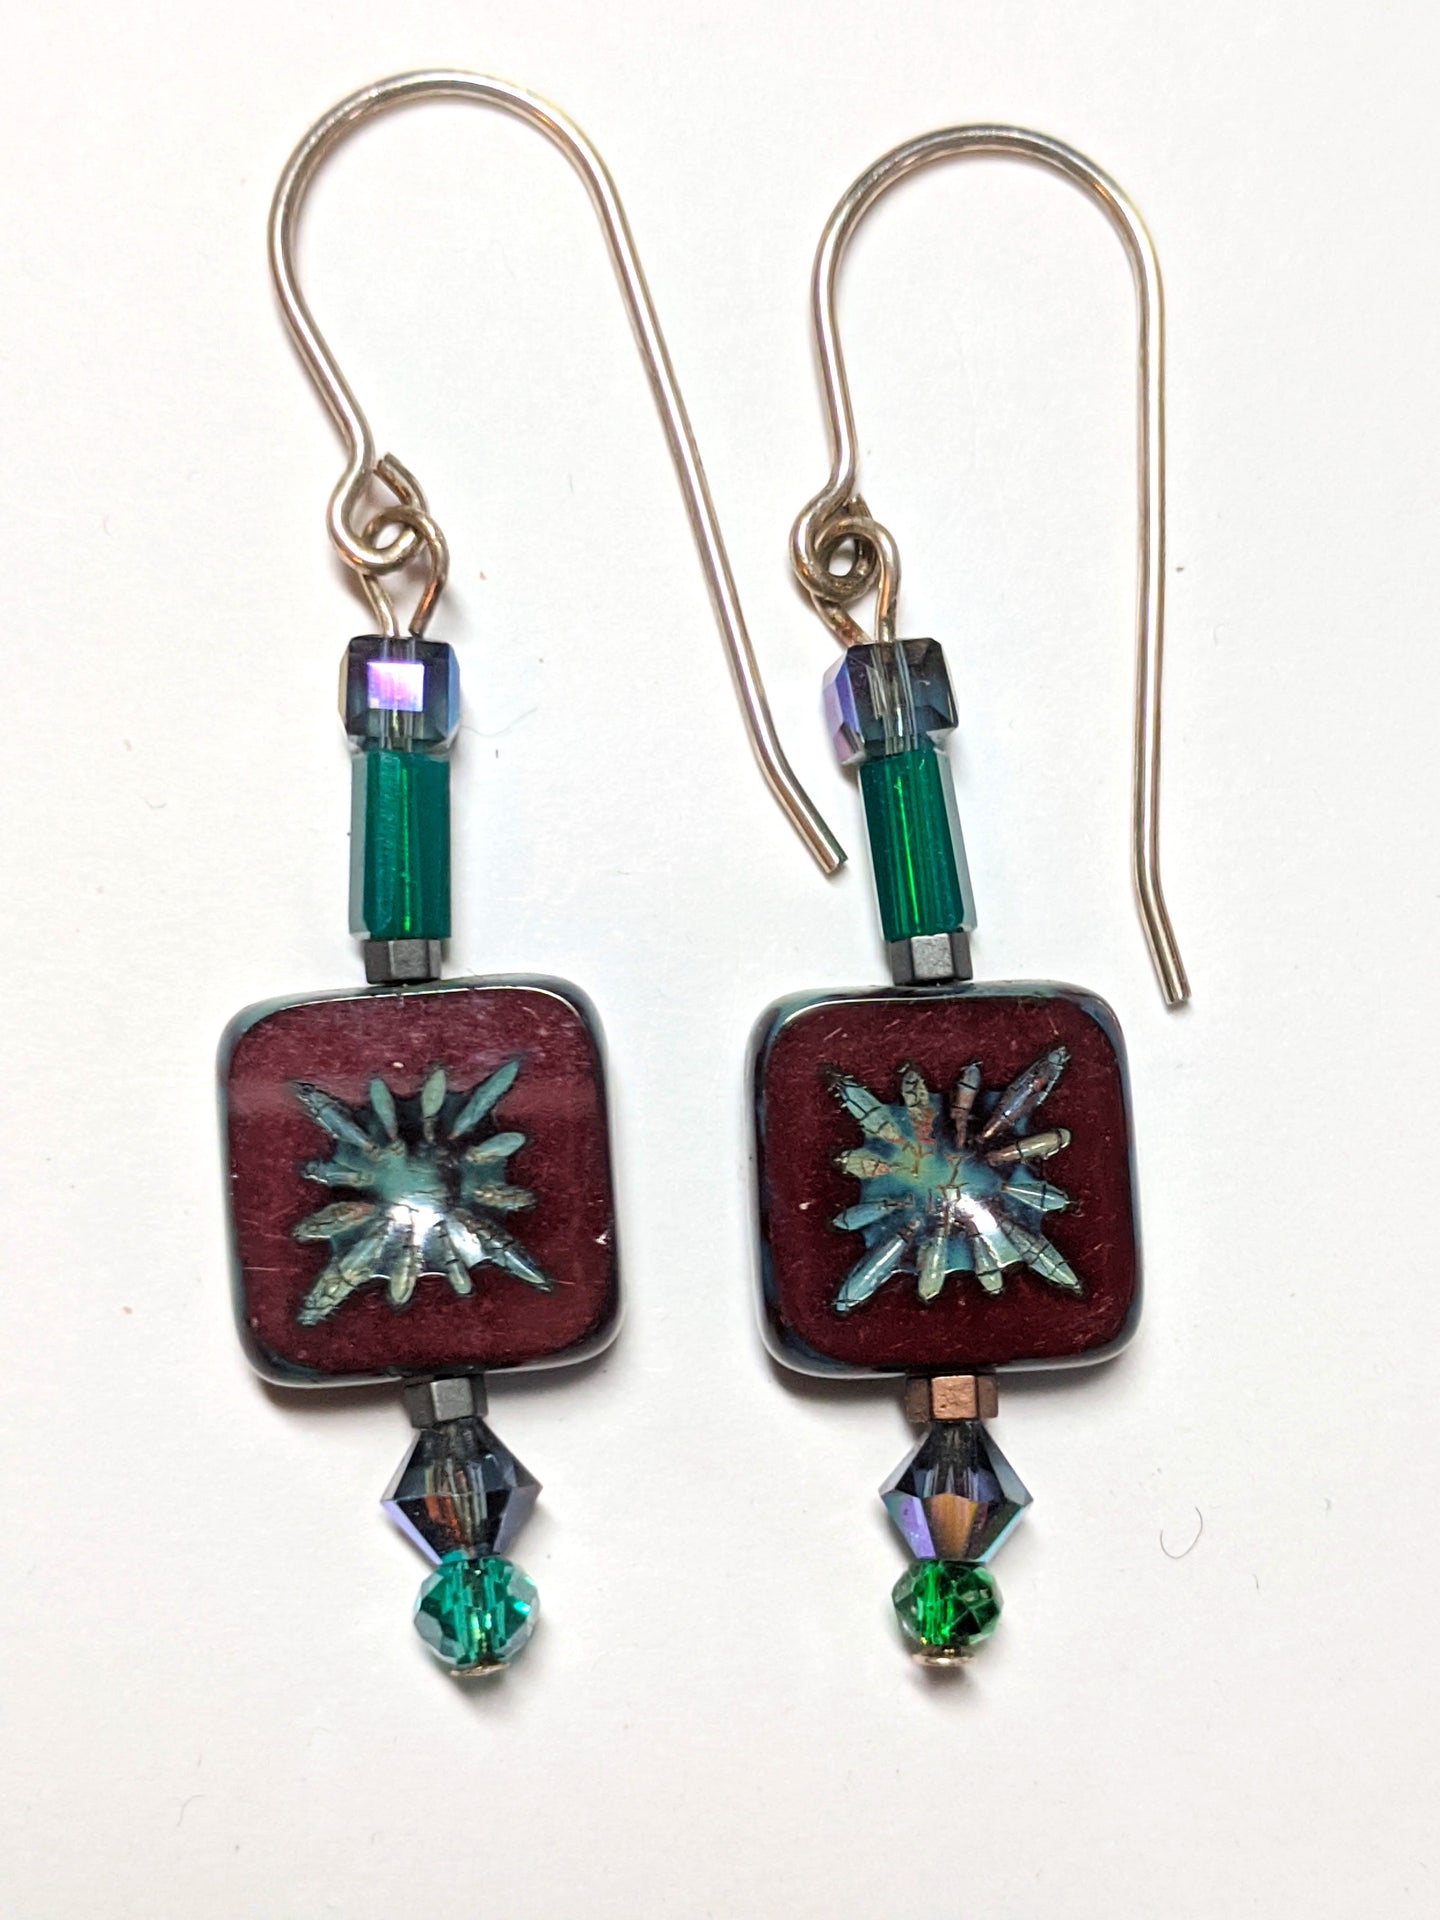 mosaic tile earrings # 3 - sunroot studio